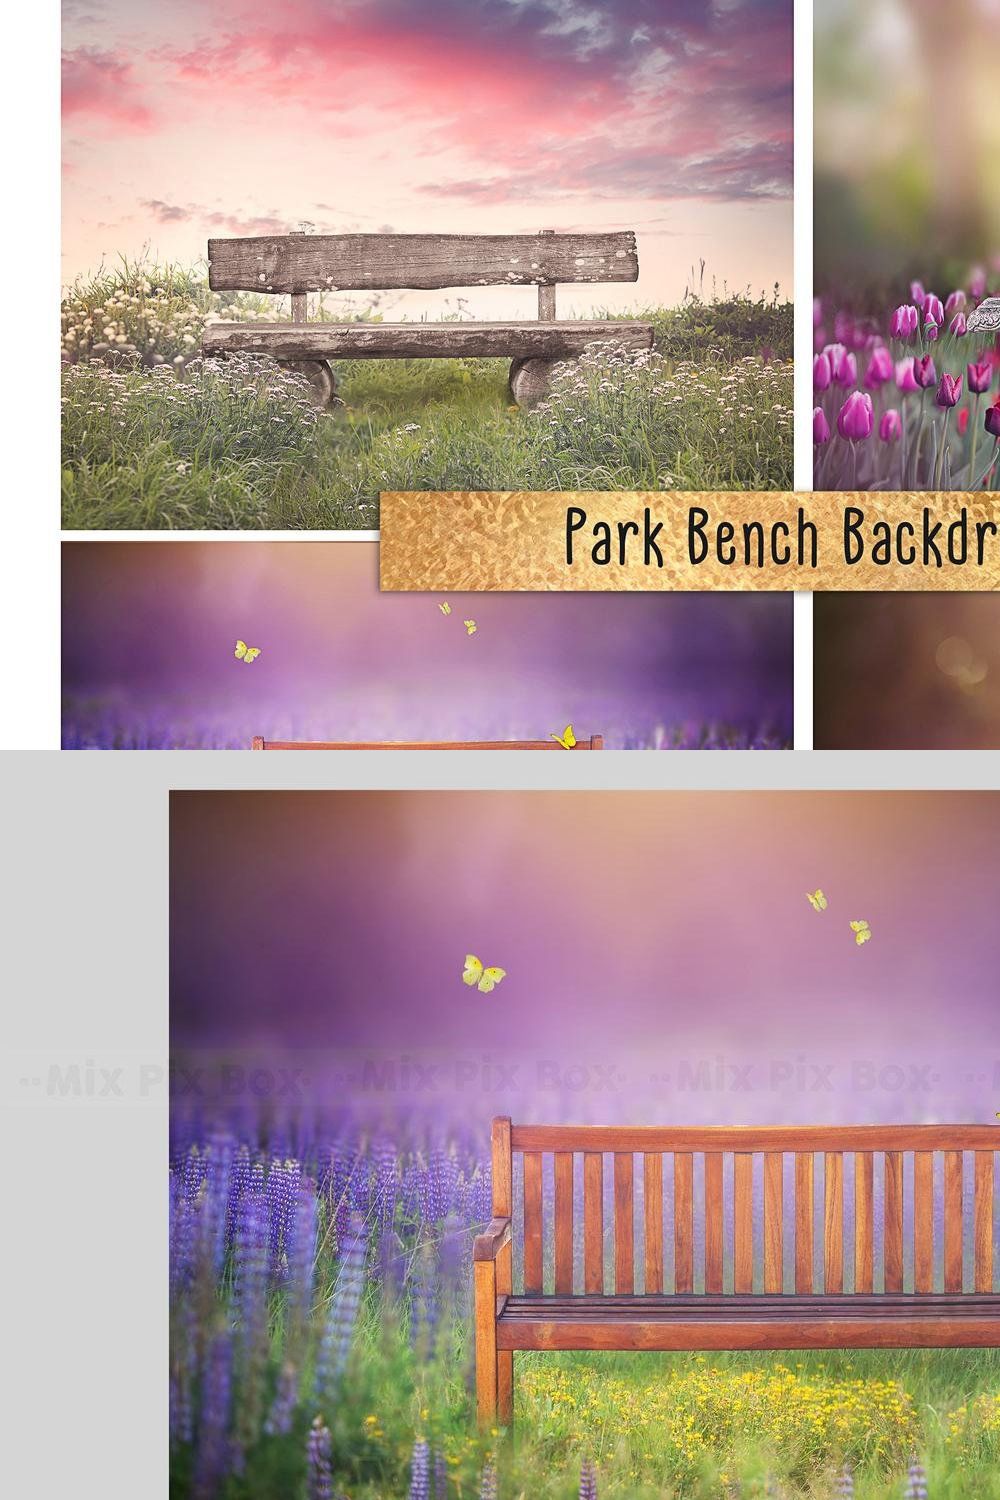 Park Bench Backdrops pinterest preview image.